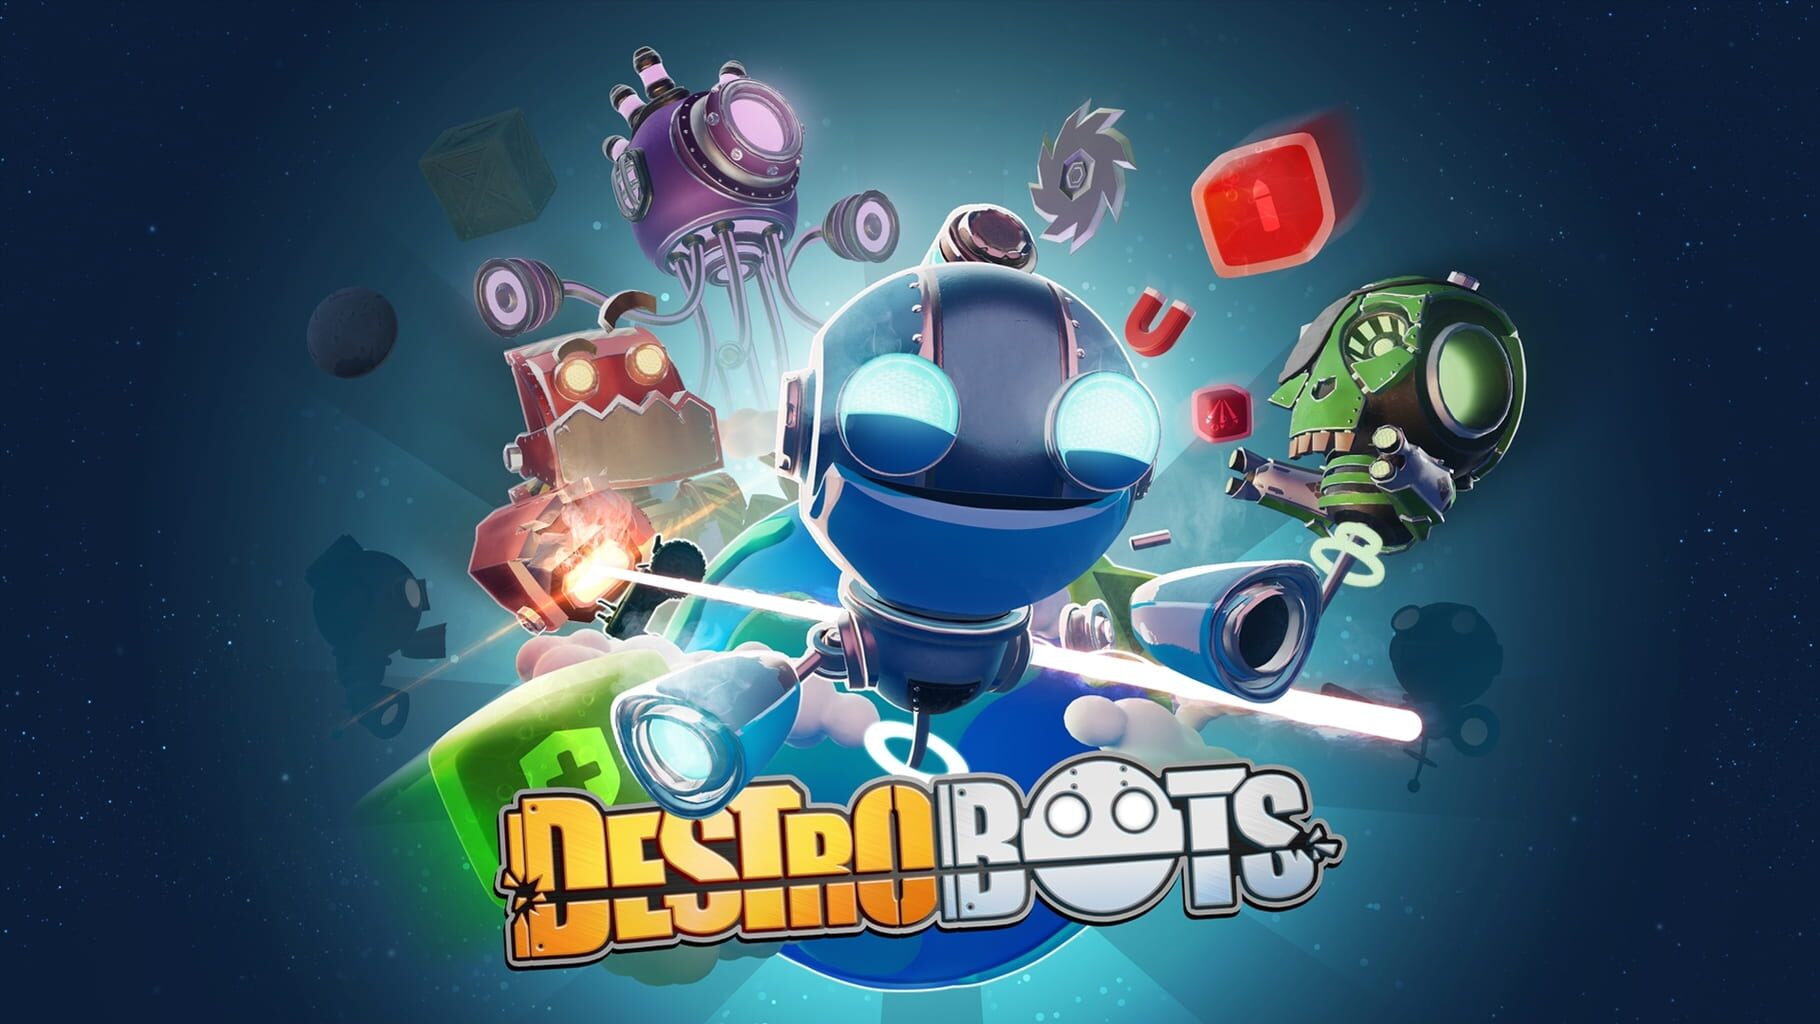 Destrobots artwork